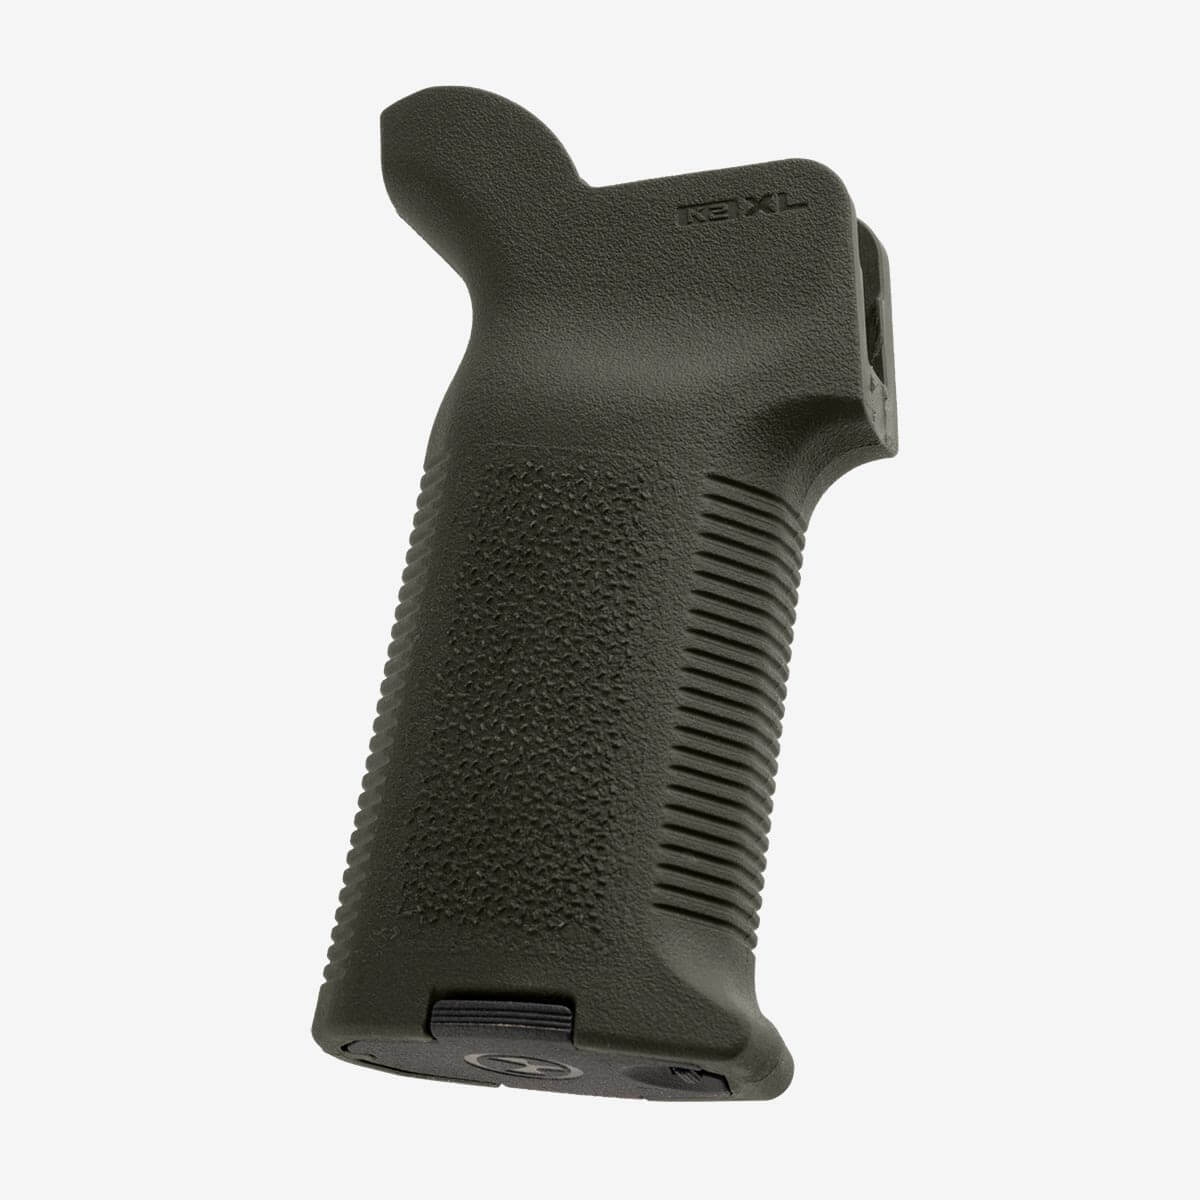 MOE® K2-XL Grip – AR15/M4 ODG